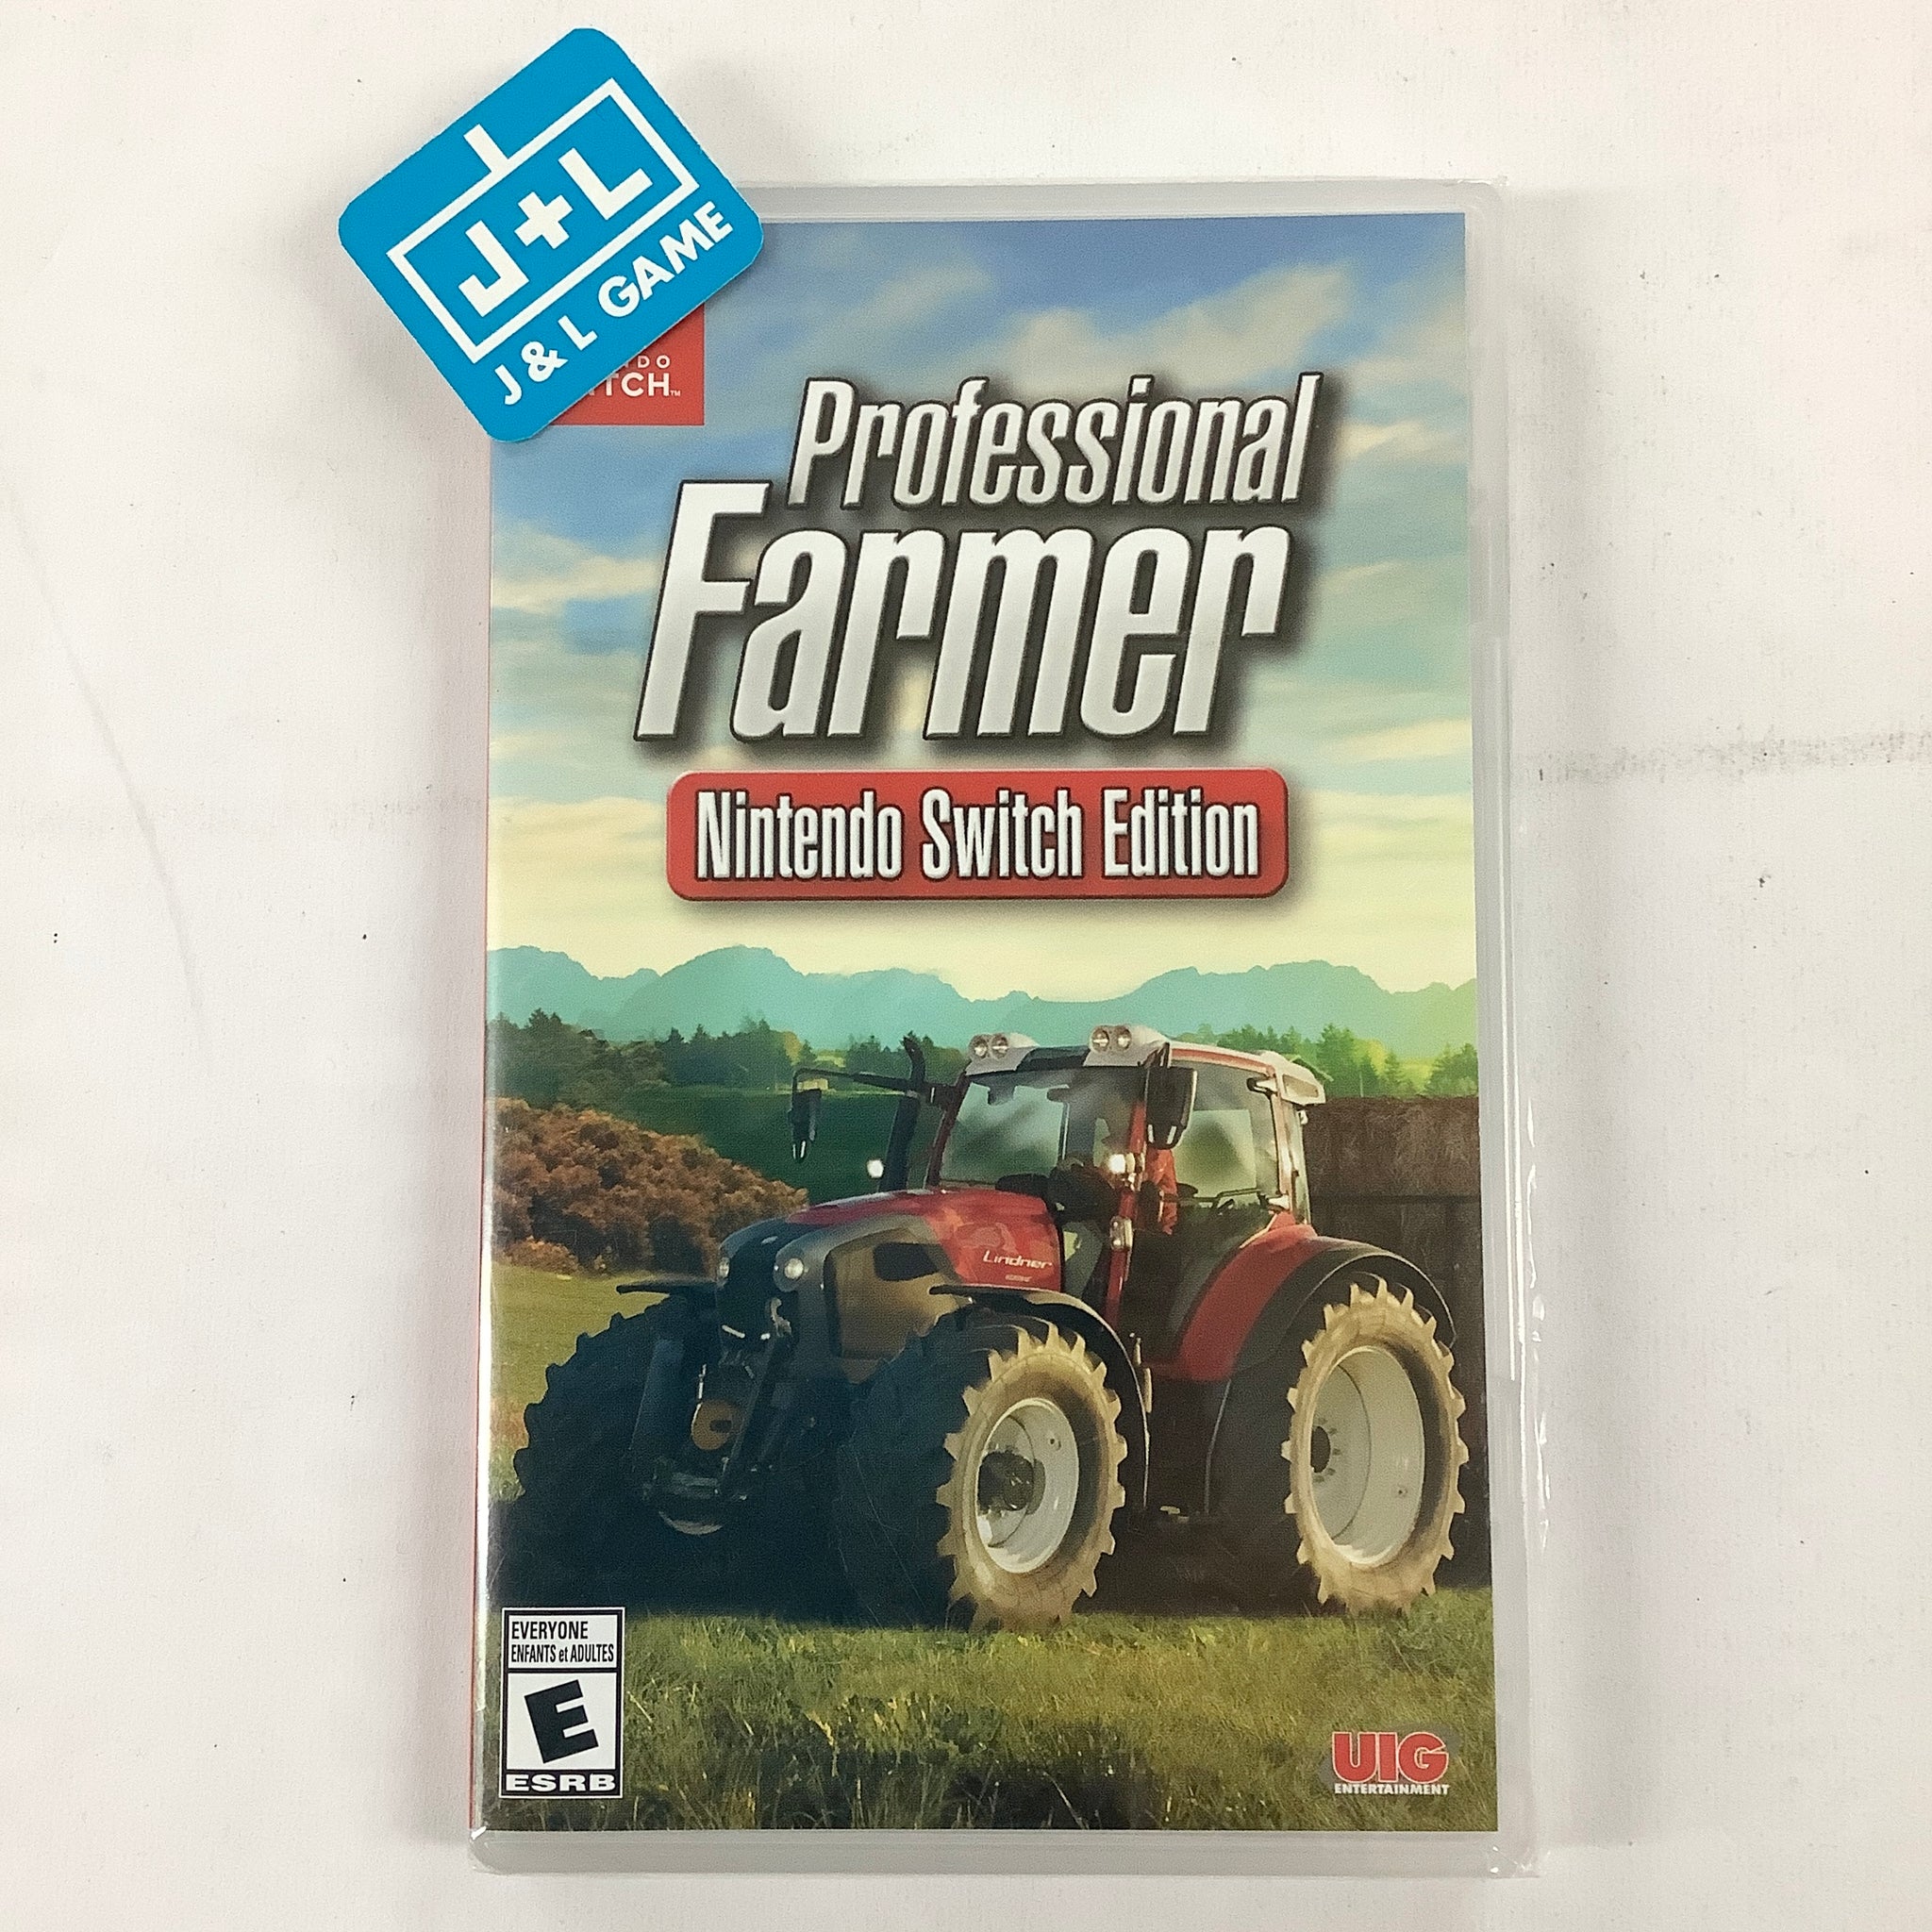 Professional Farmer: Nintendo Switch Edition - (NSW) Nintendo Switch Video Games UIG Entertainment   